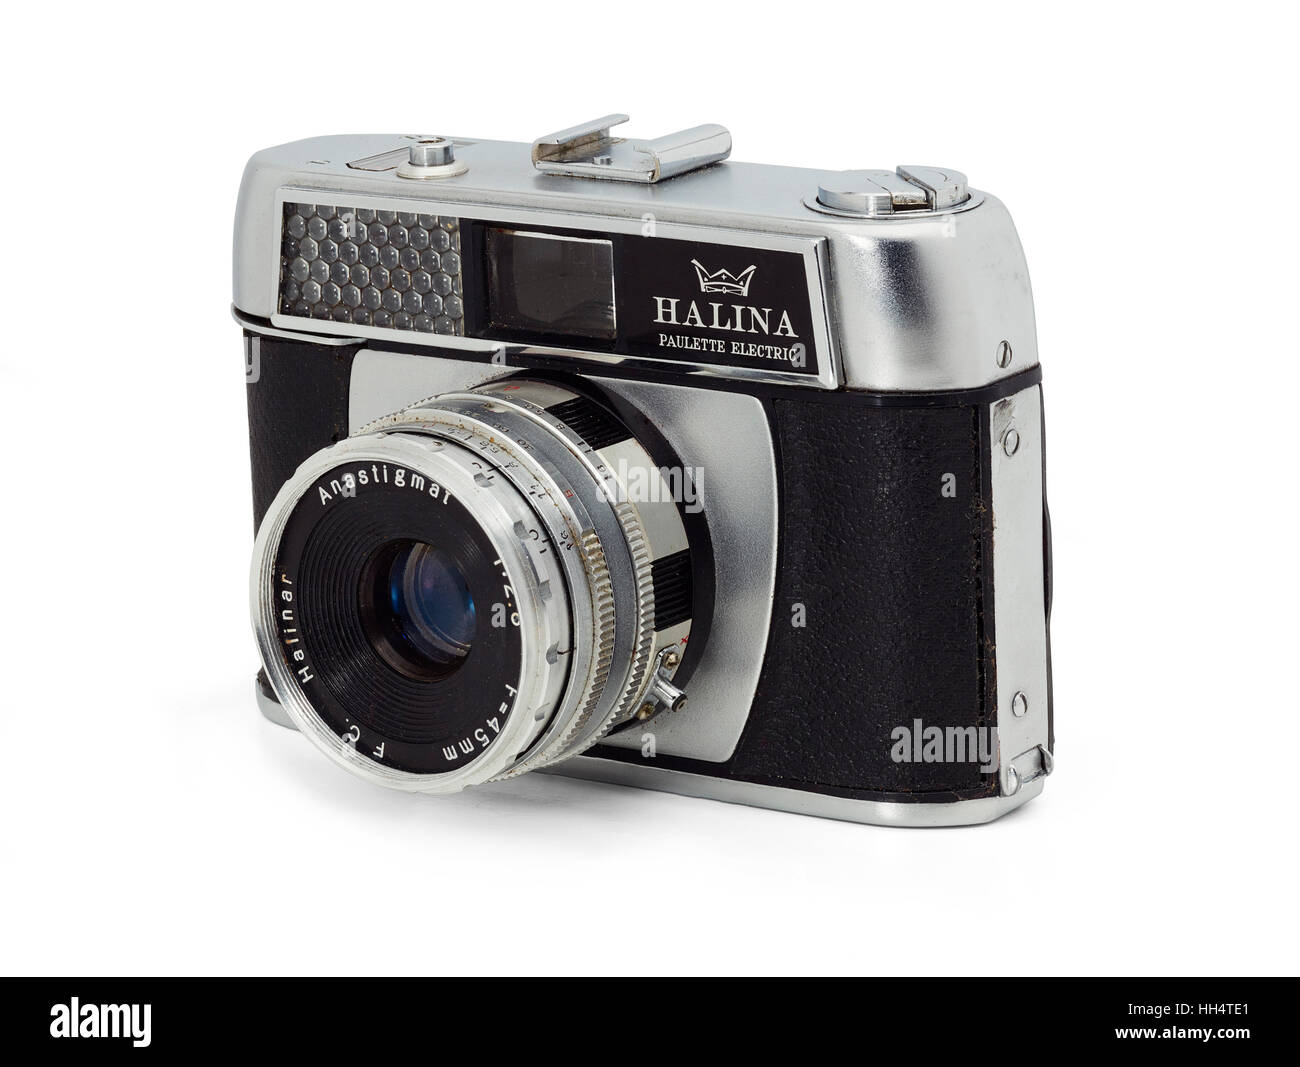 Halina camera hi-res stock photography and images - Alamy